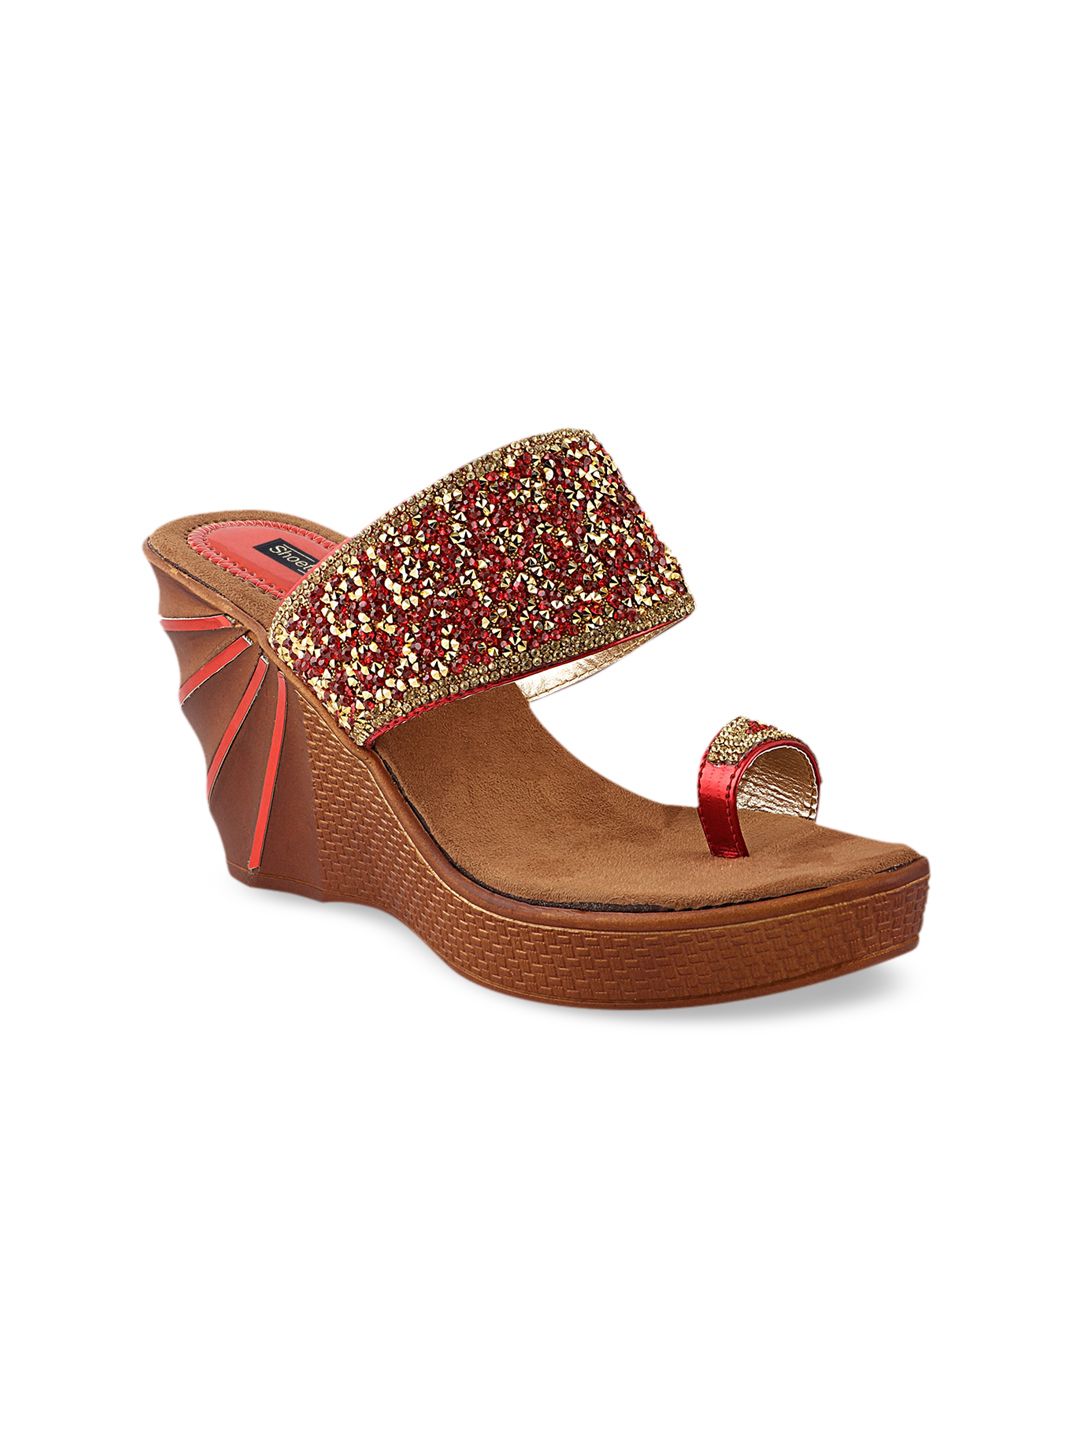 Shoetopia Women Red Embellished Heels Price in India